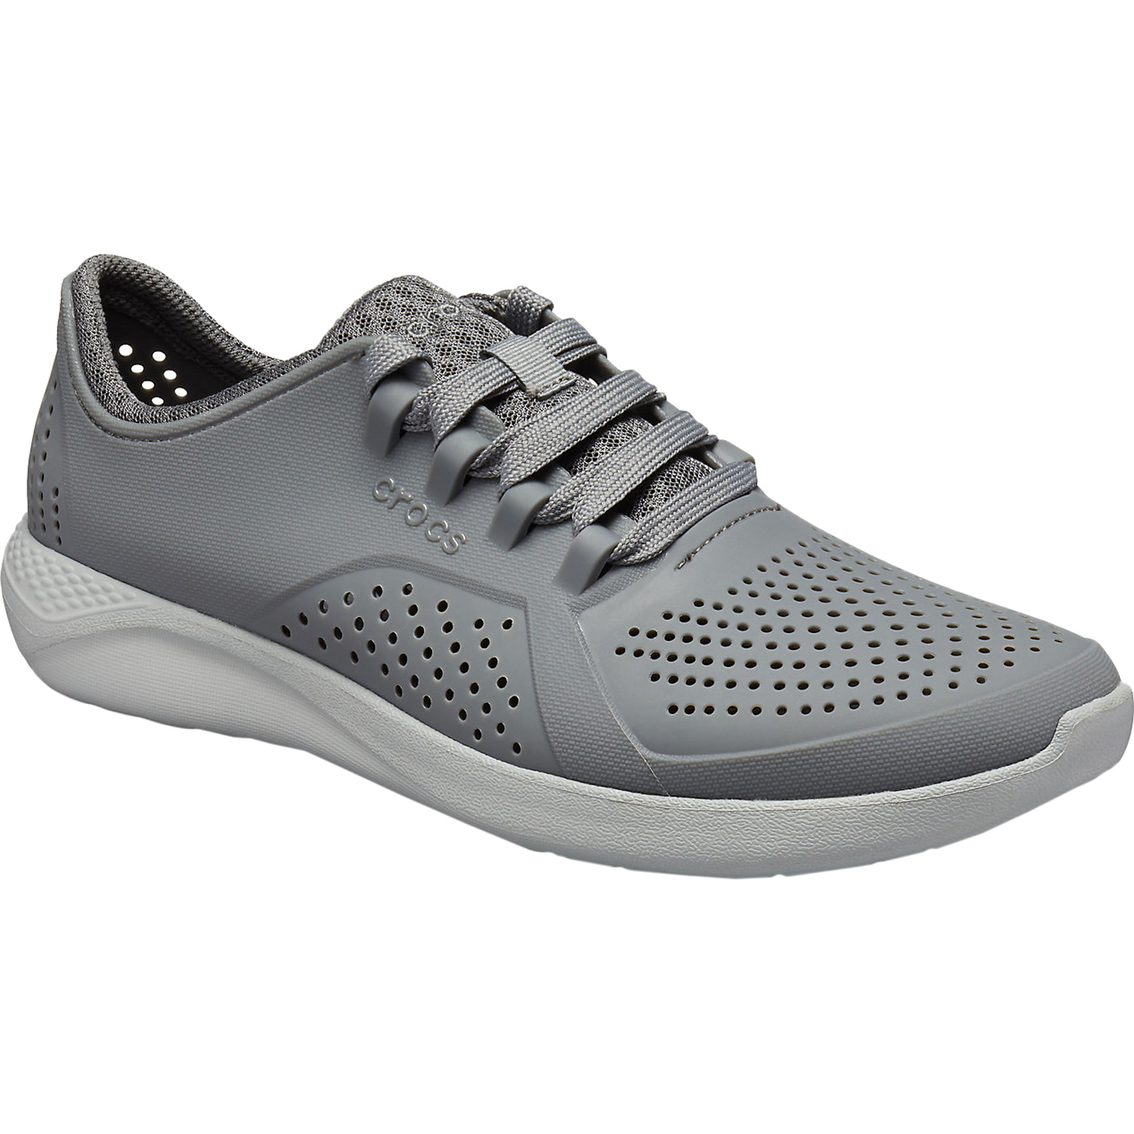 Crocs Men's Literide Pacer Casual Comfort Shoes | Casuals | Shoes ...